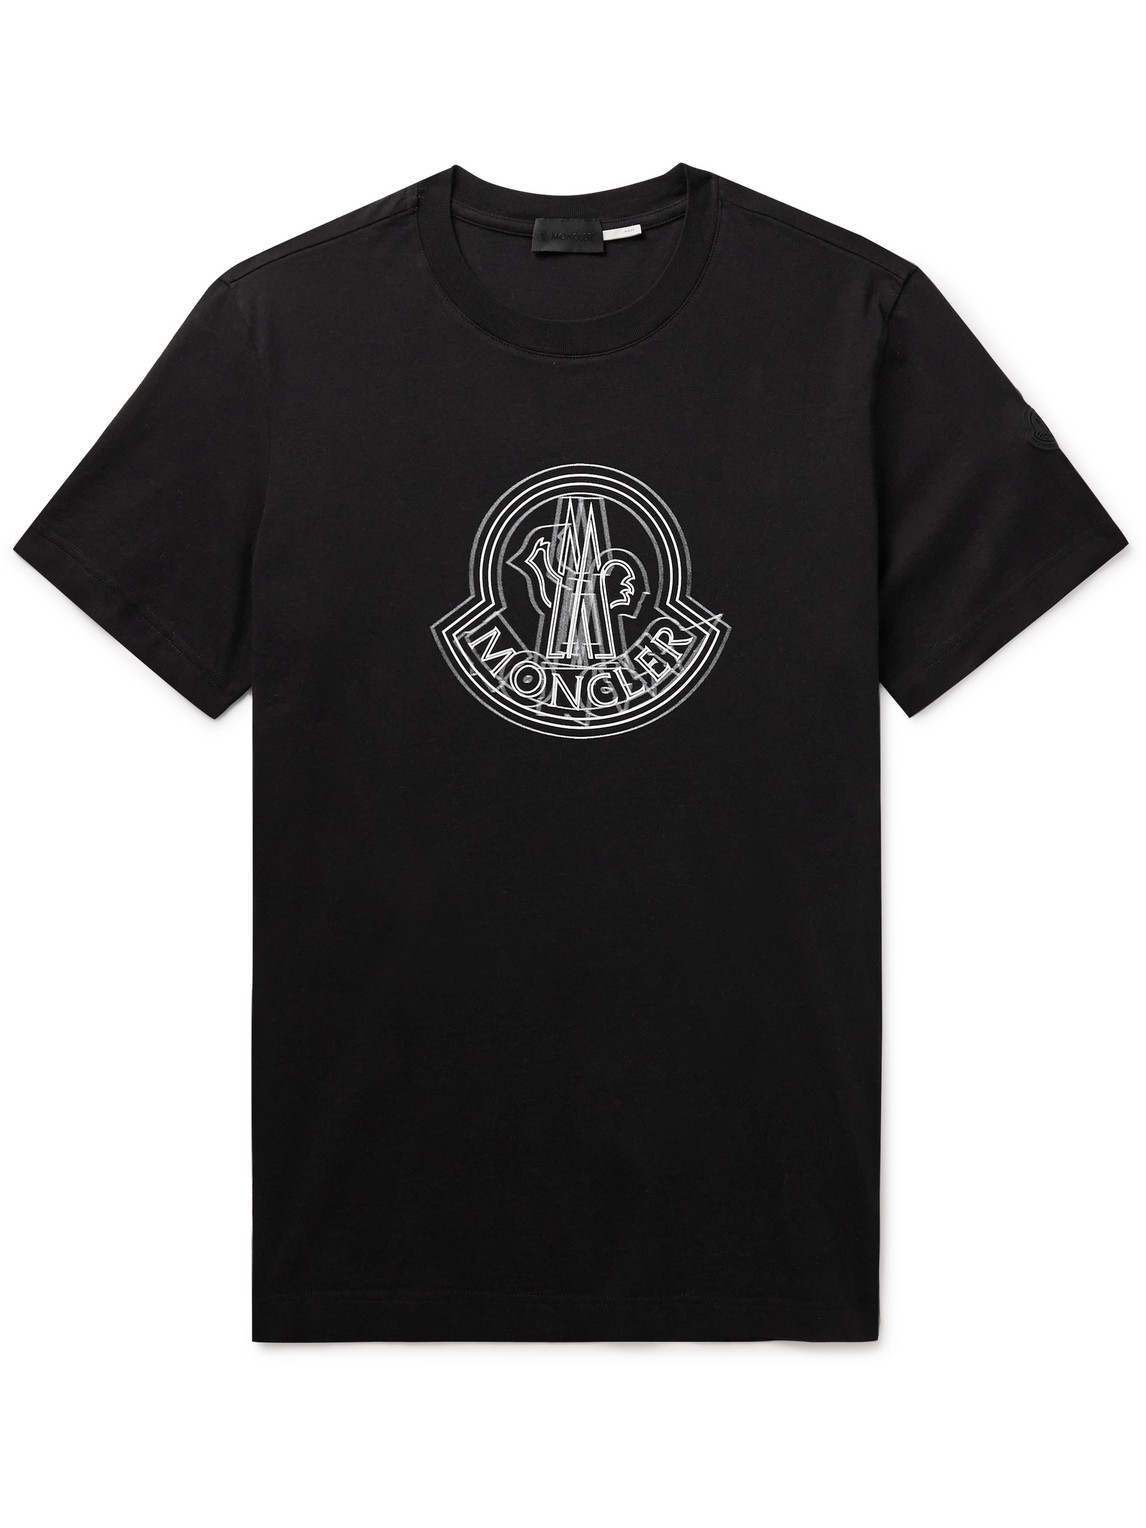 Moncler - Logo-Appliquéd Printed Cotton-Jersey T-Shirt - Men - Black - M von Moncler